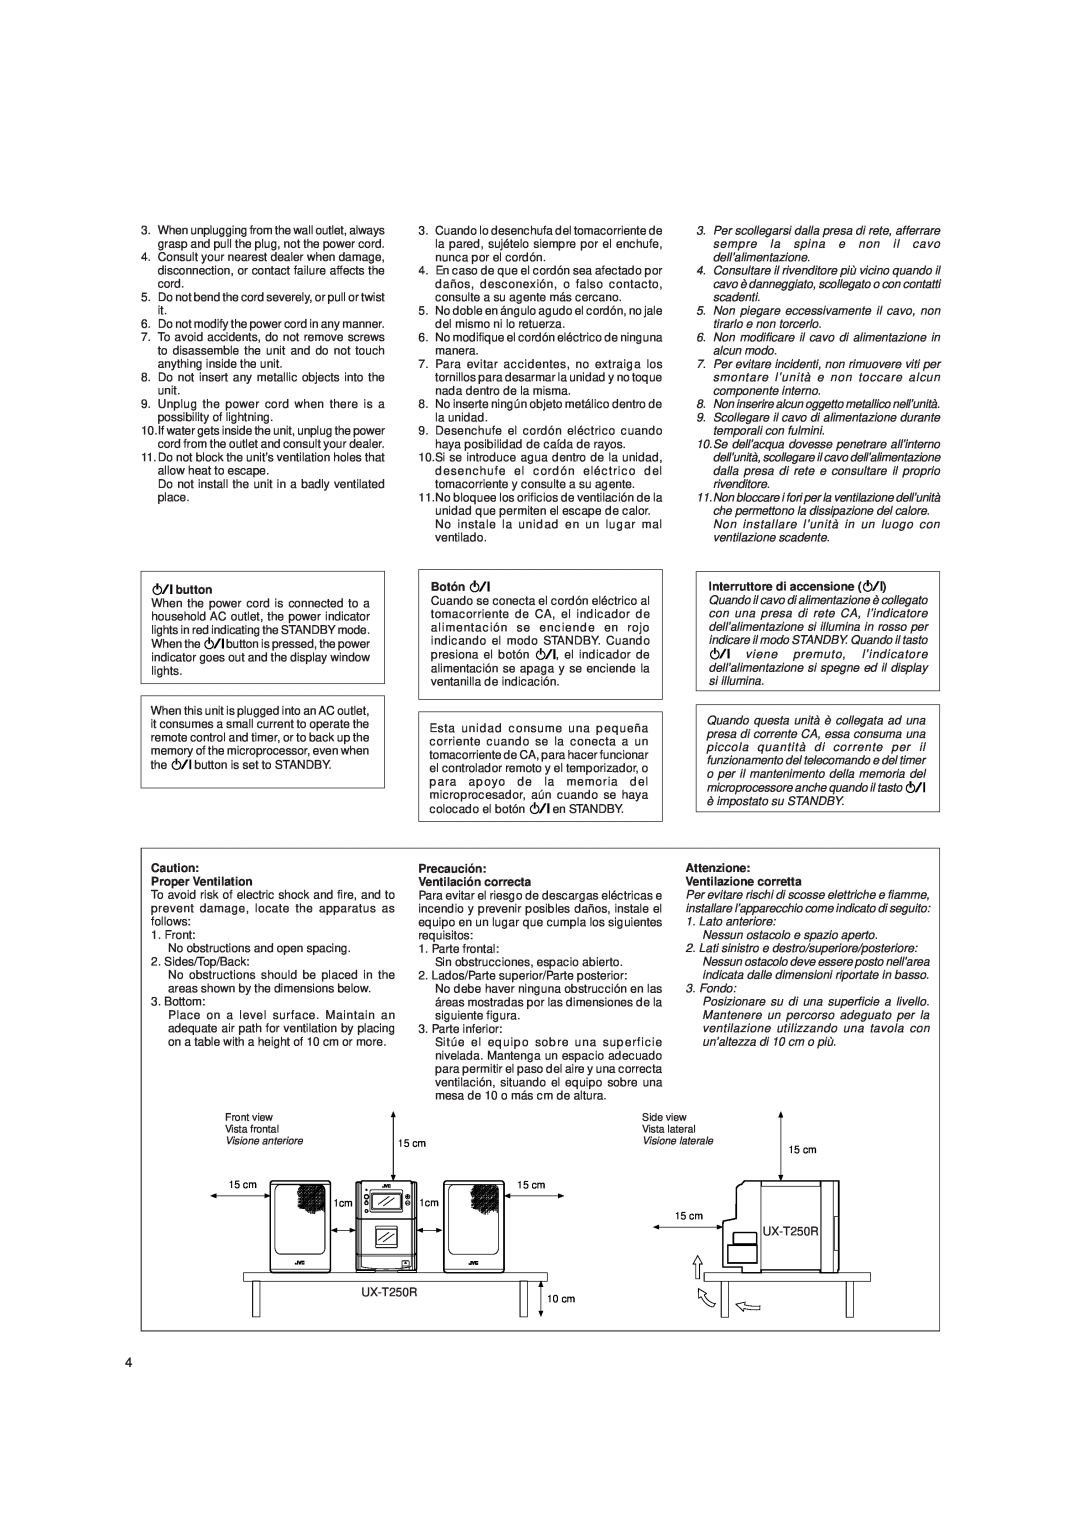 JVC LVT0059-001A button, Botón, Proper Ventilation, Precaución Ventilación correcta, Attenzione Ventilazione corretta 